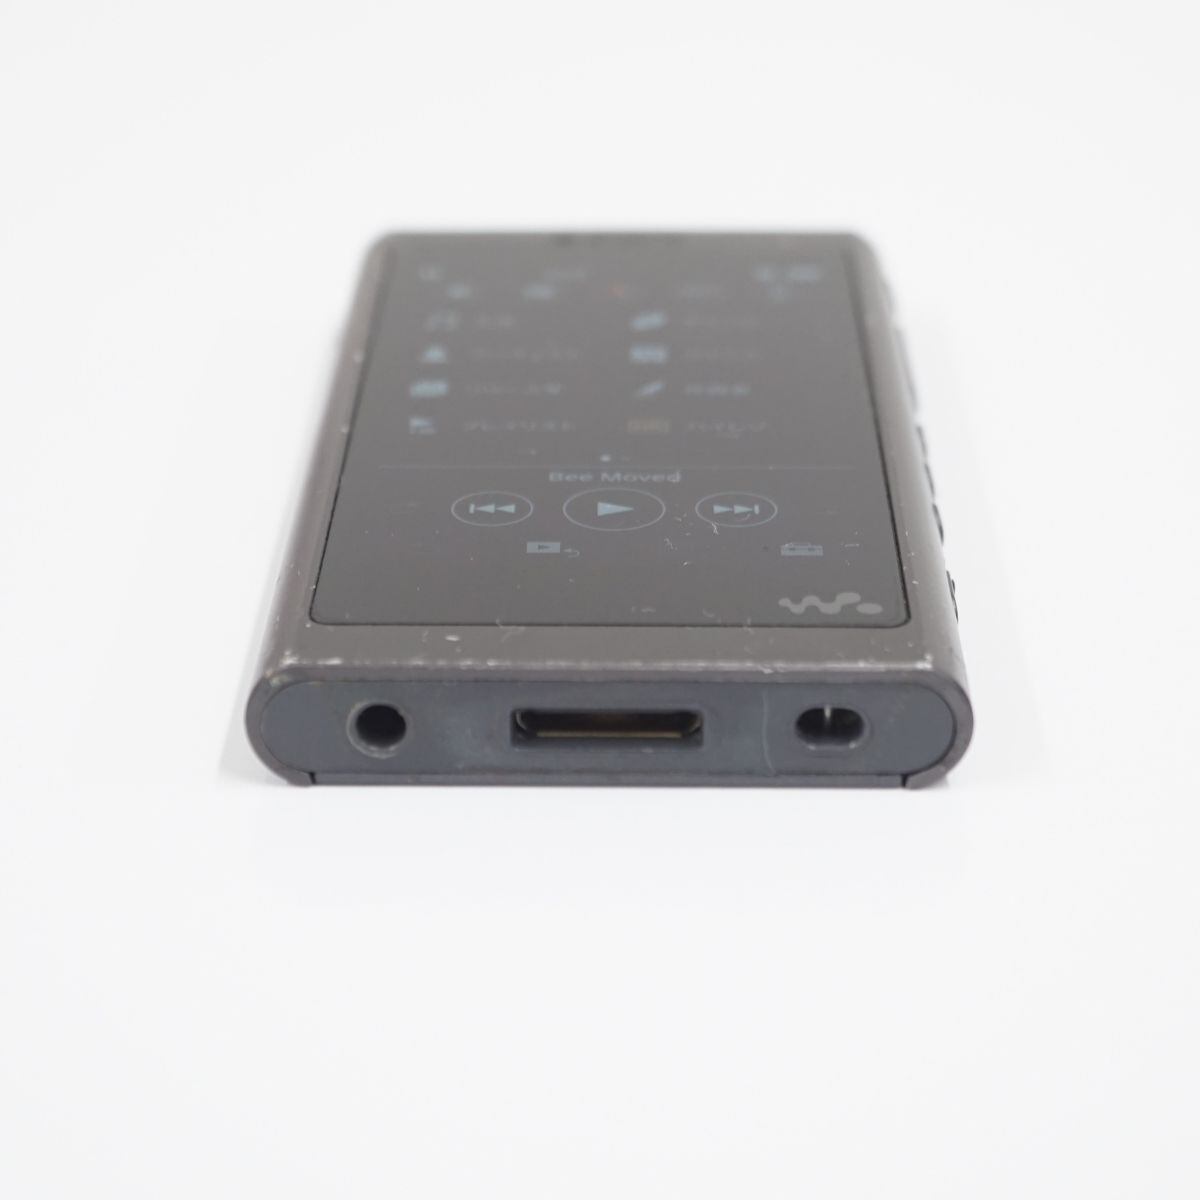 SONY Walkman ウォークマン NW-A57 64GB USED品 本体のみ グレイッシュ